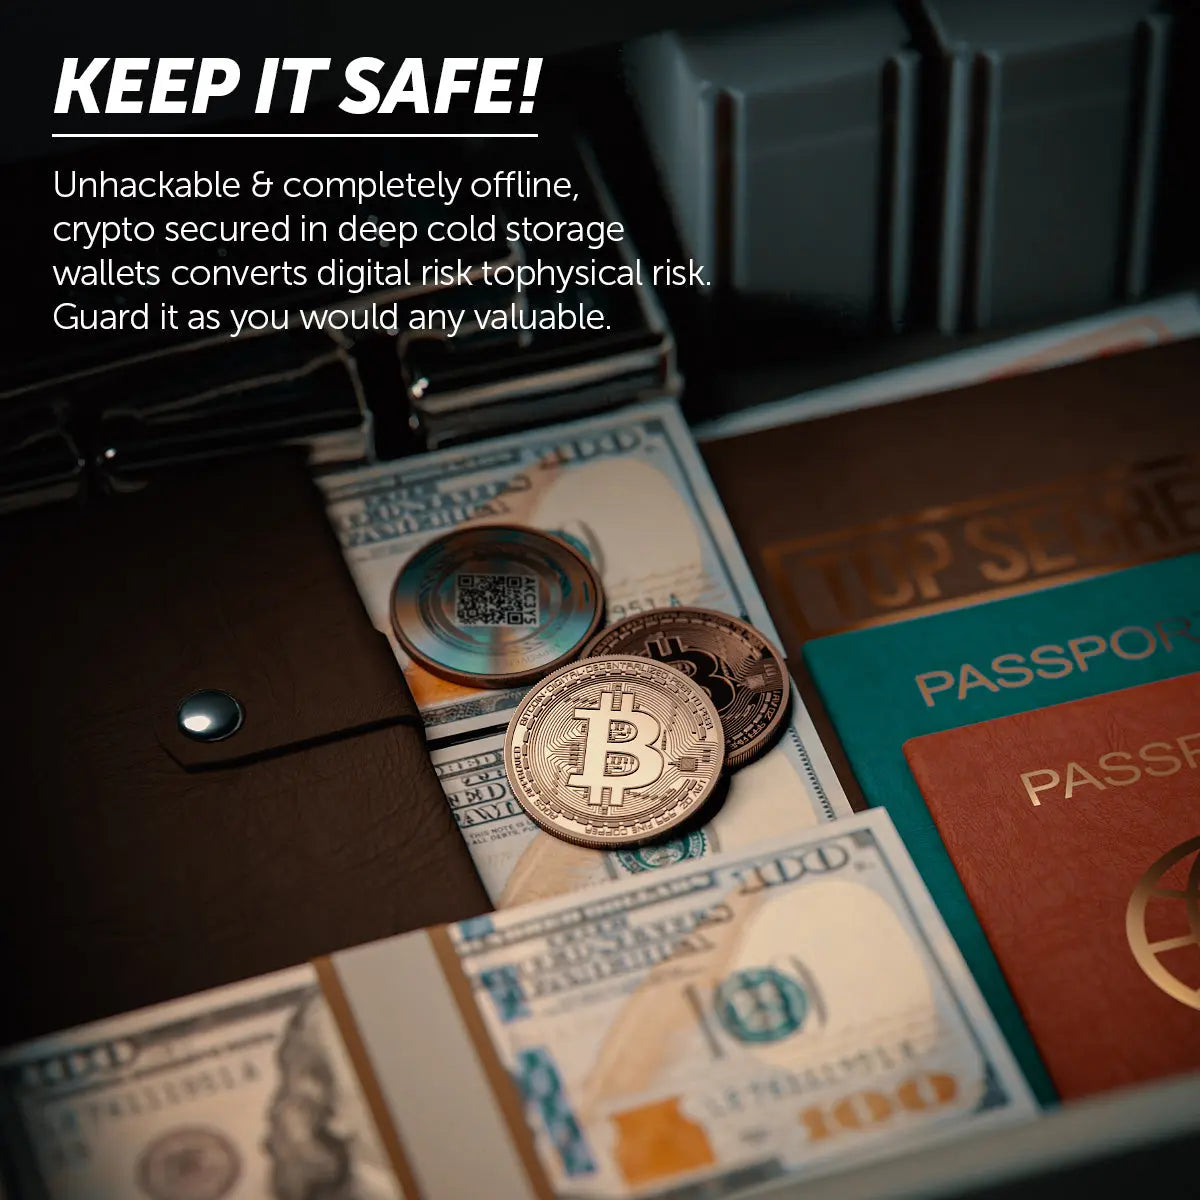 Bitcoin BTC Cold Storage Wallet Blockchain Mint